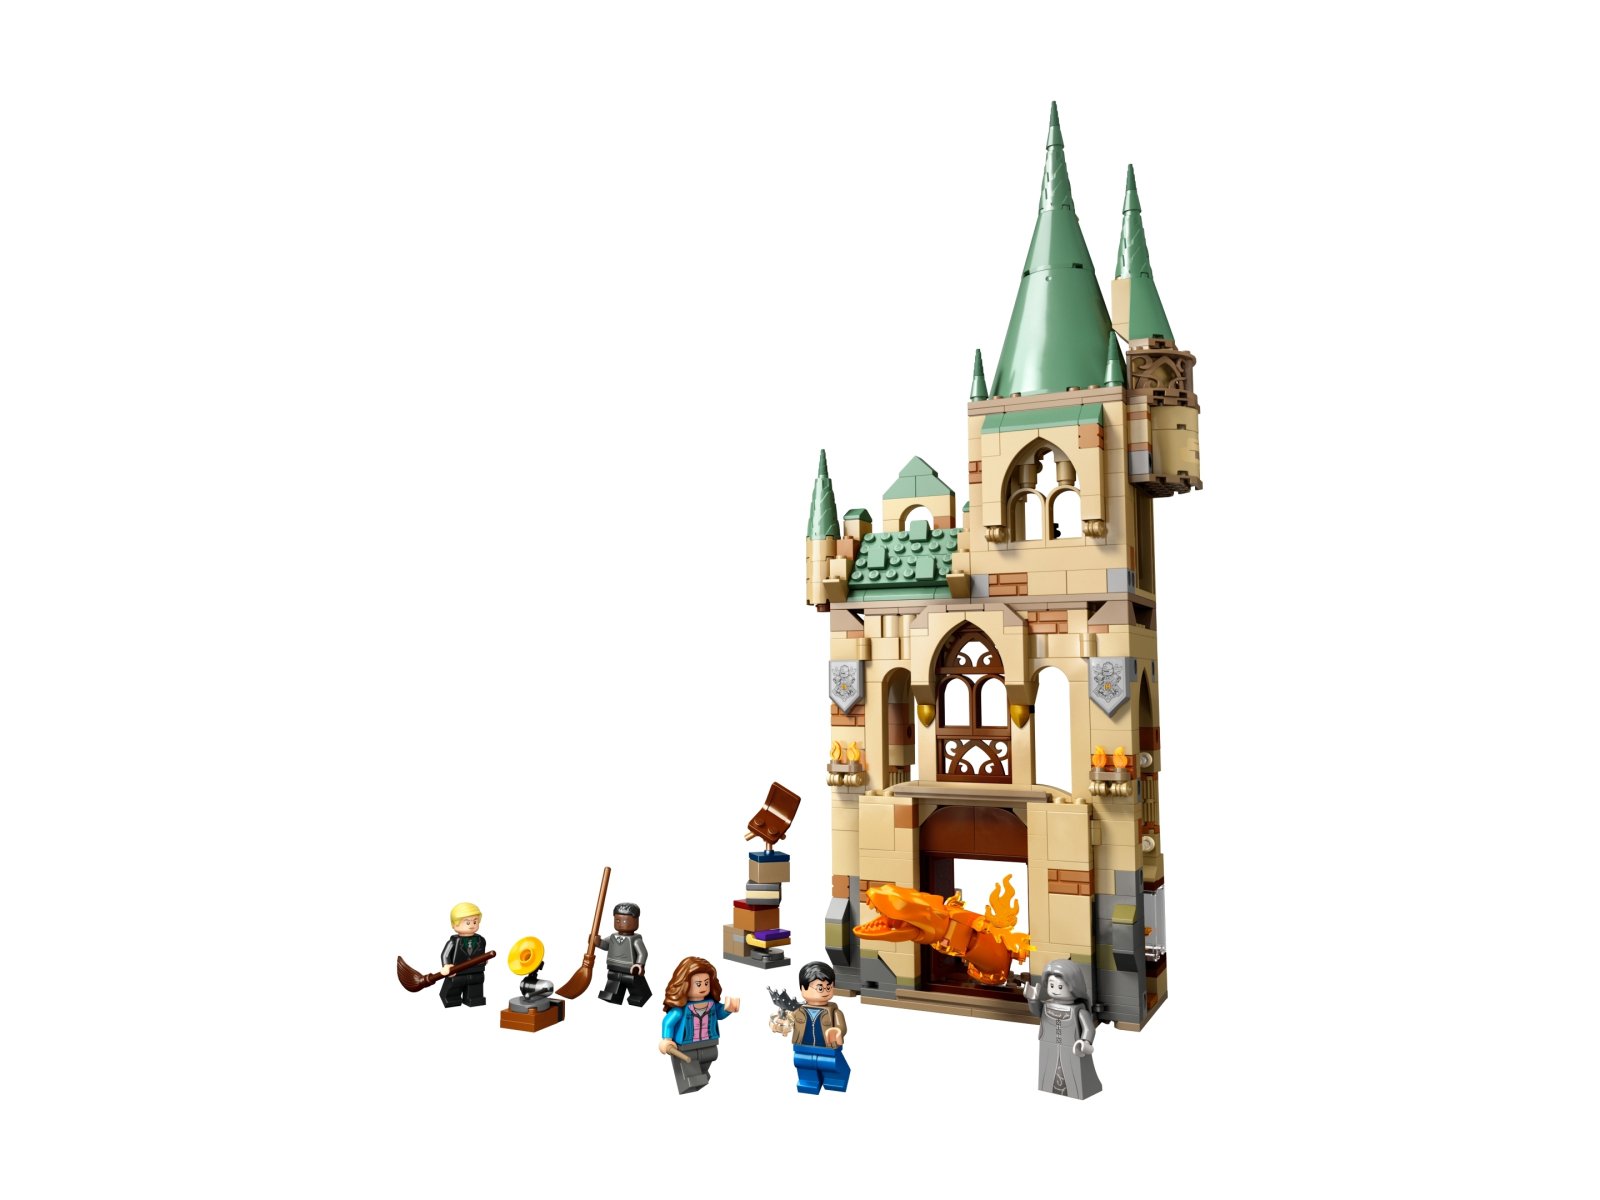 LEGO 76413 Harry Potter Hogwart™: Pokój życzeń